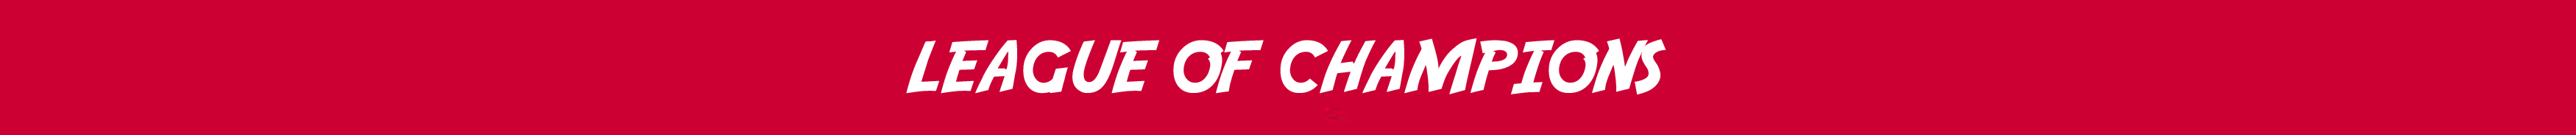 League of Champions Sponsor Level Banner 2018